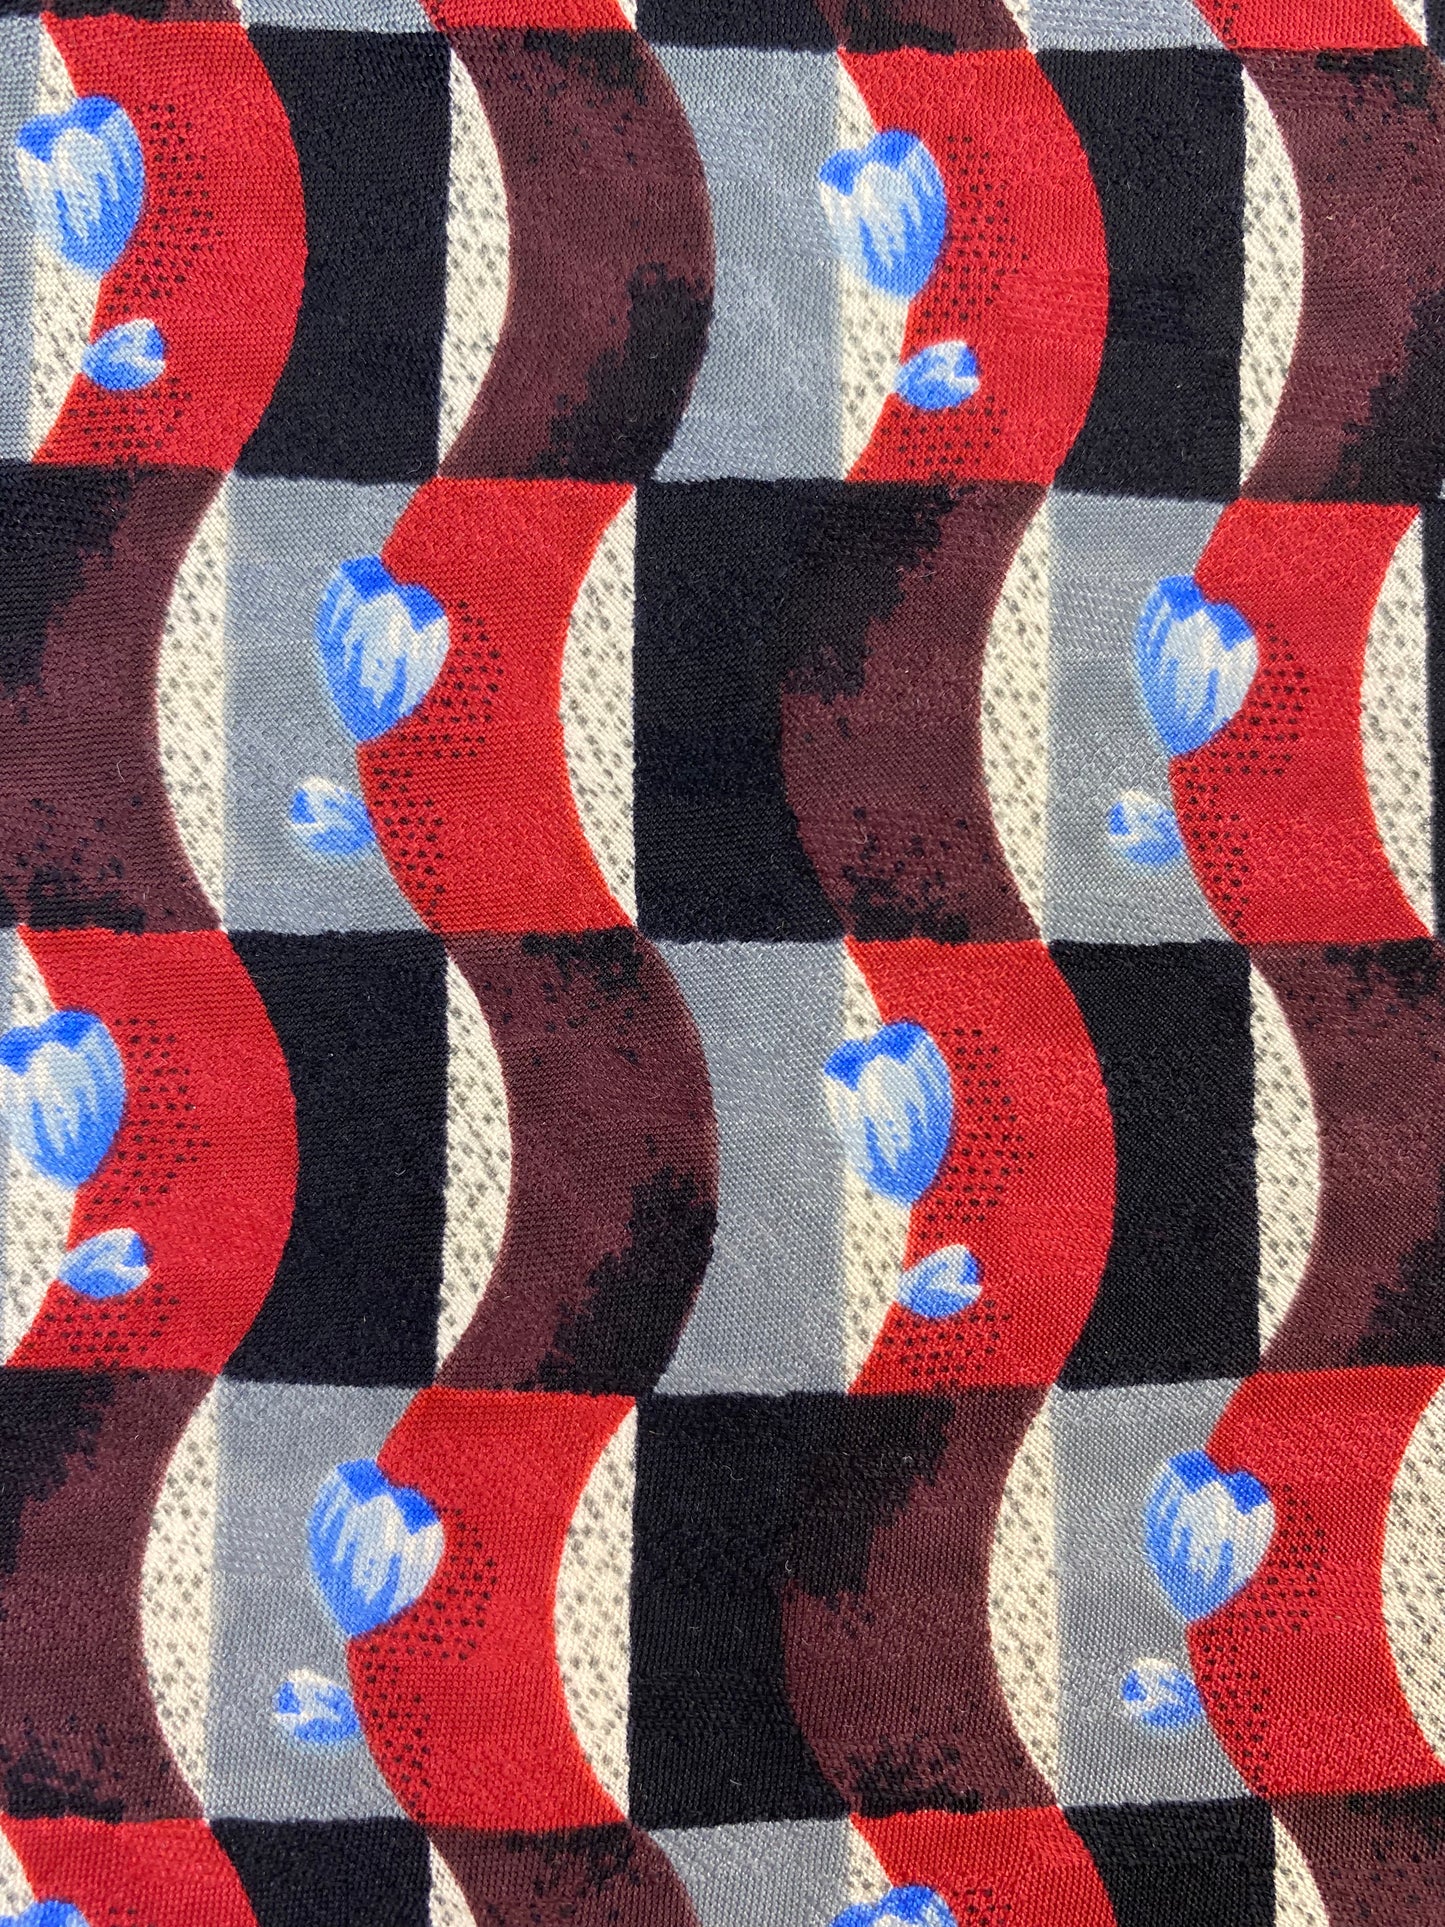 90s Deadstock Silk Necktie, Men's Vintage Red/ Black Geometric Wave & Floral Pattern Tie, NOS